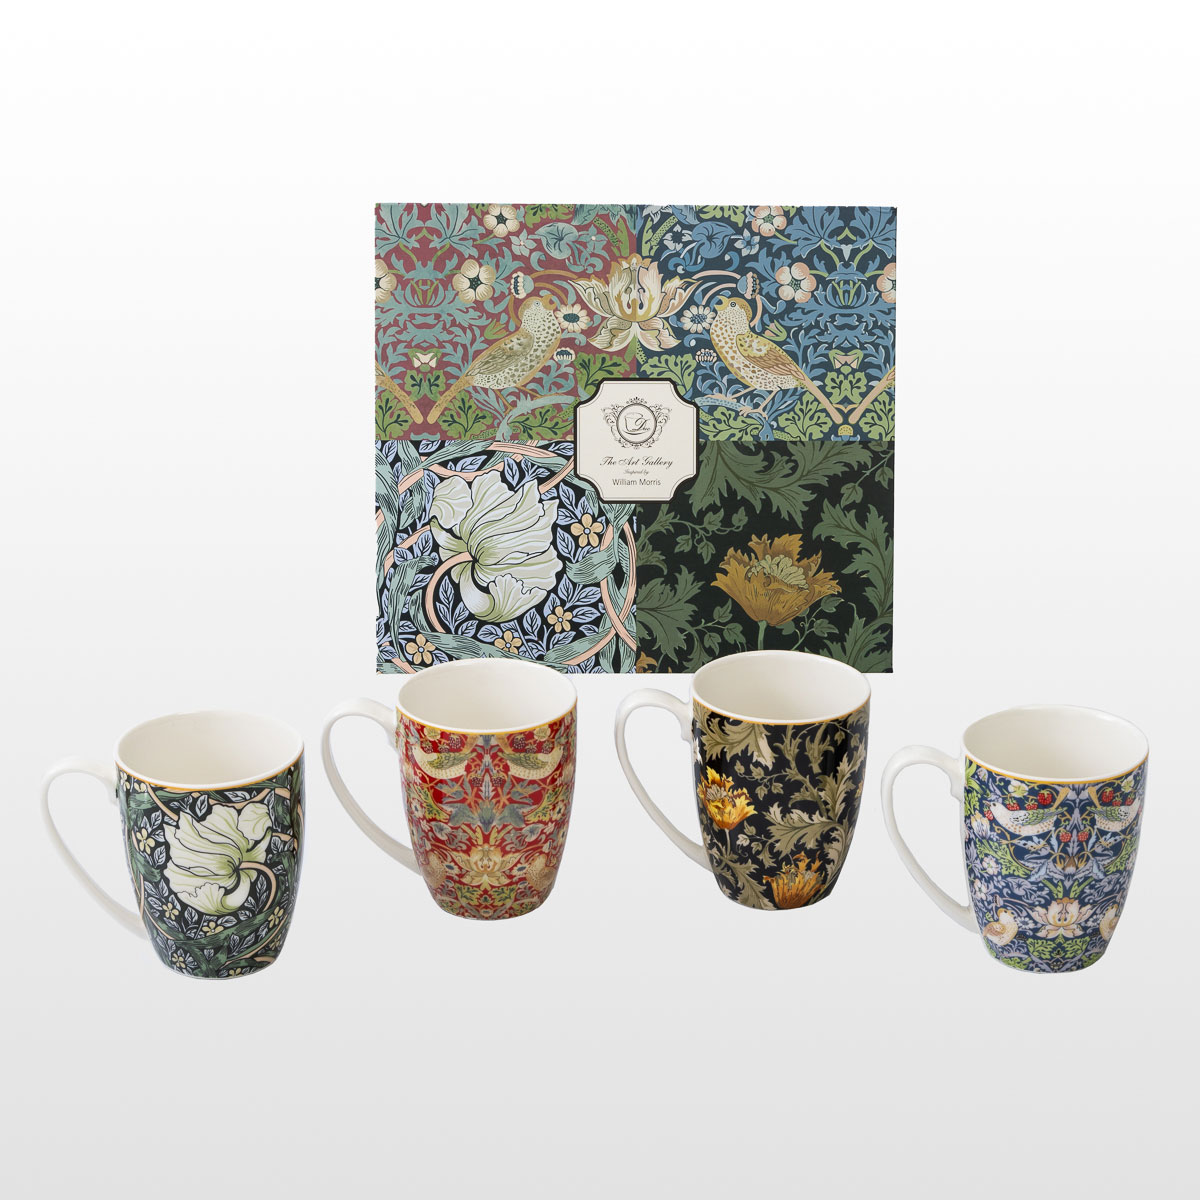 4 William Morris mugs (in a gift box), detail n°1